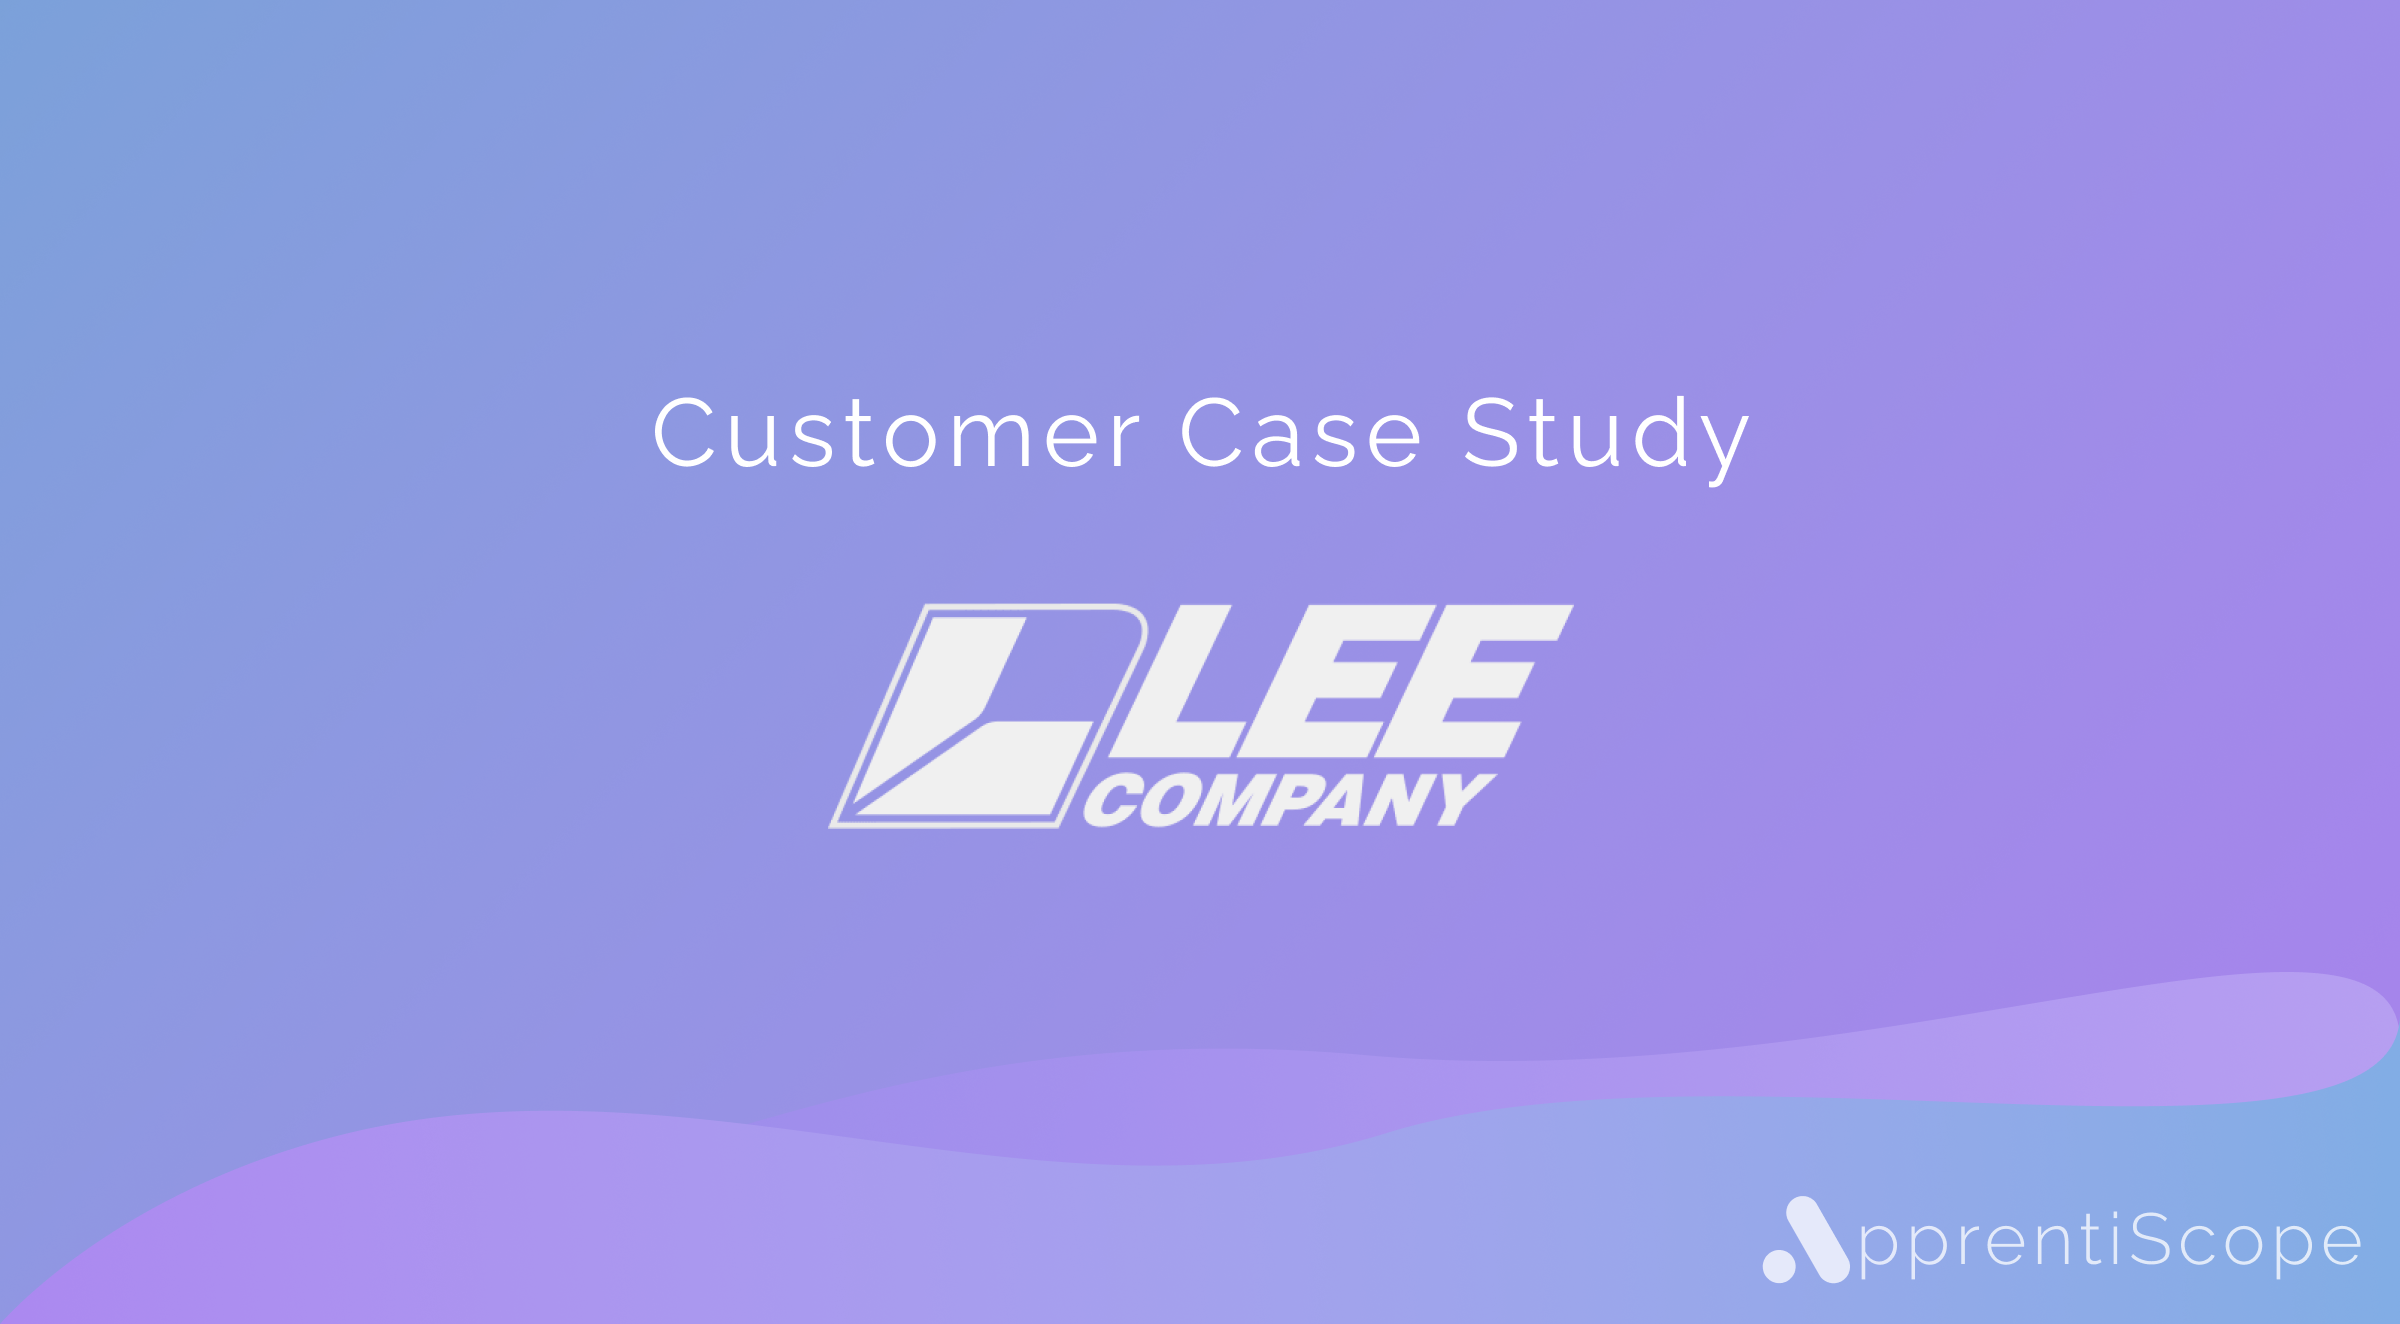 Figma image of Lee Company logo. 